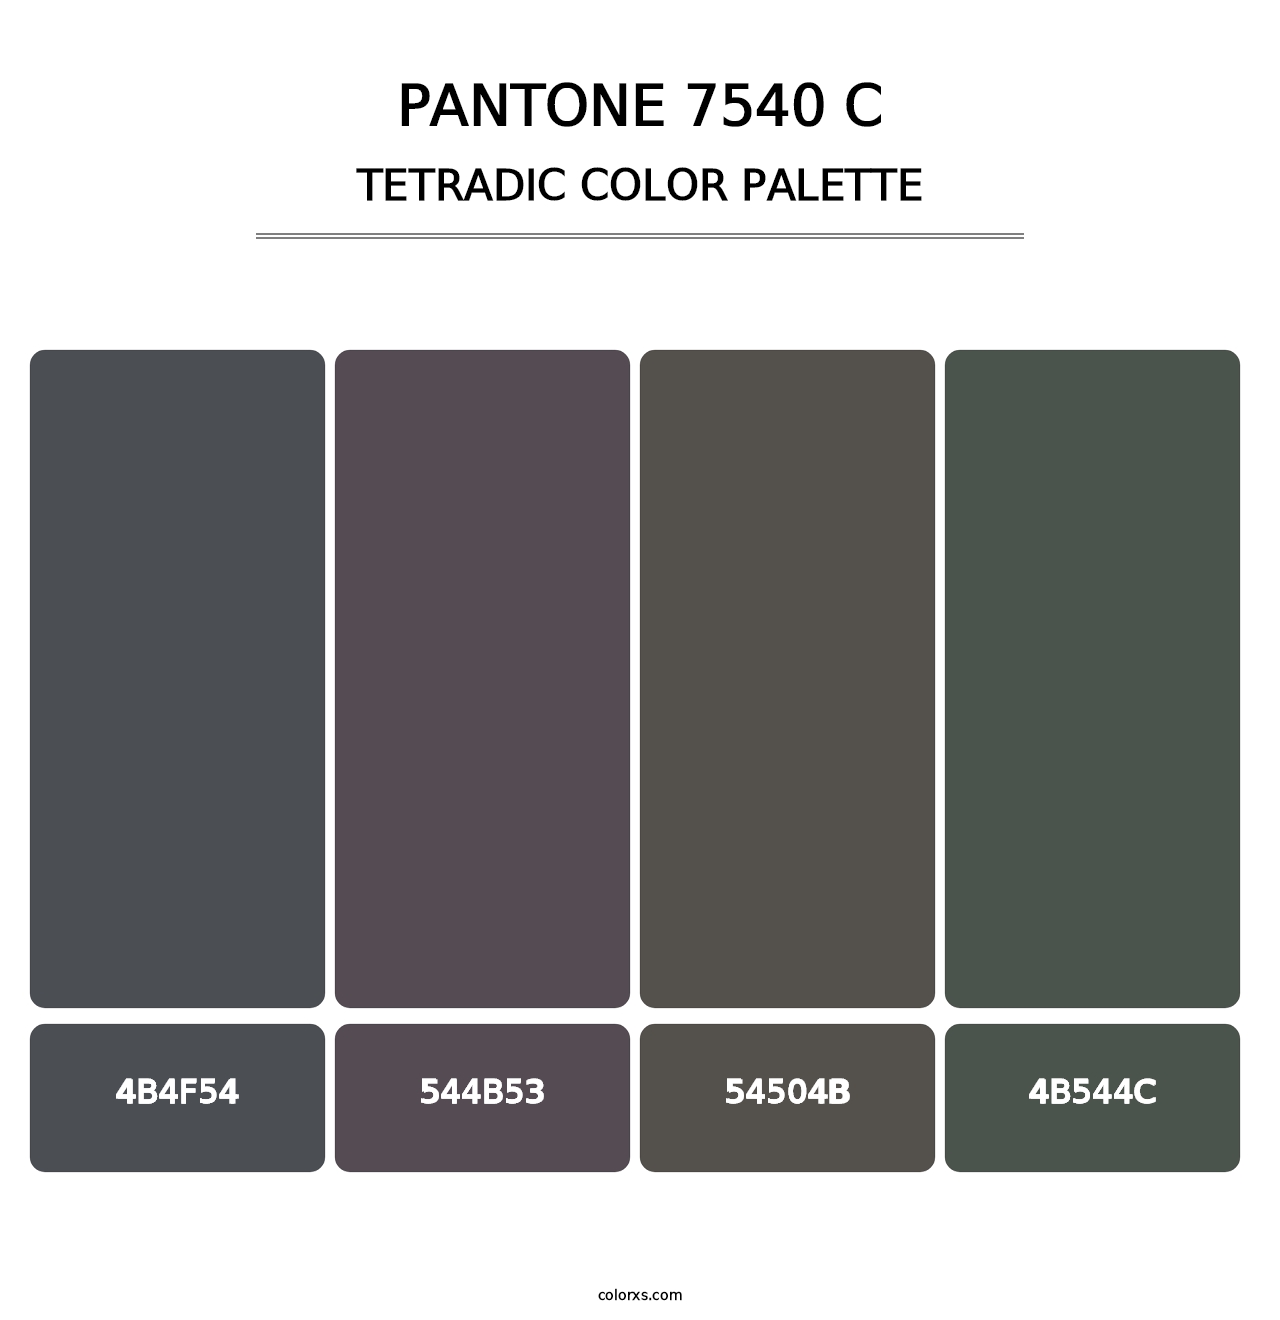 PANTONE 7540 C - Tetradic Color Palette